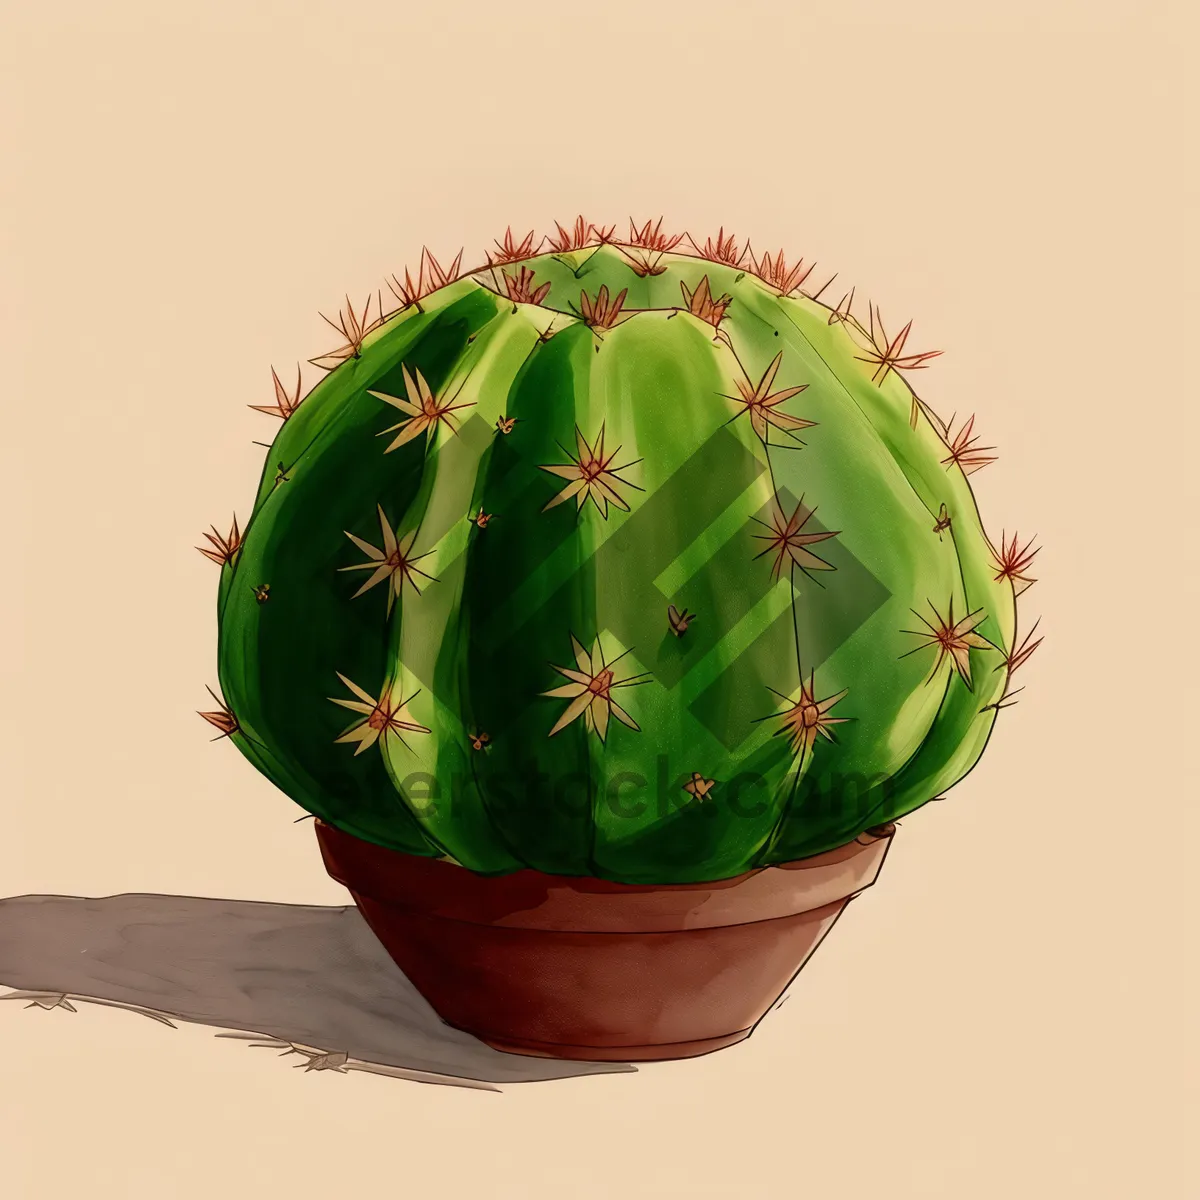 Picture of Festive Winter Cactus Decorative Ornament Sphere